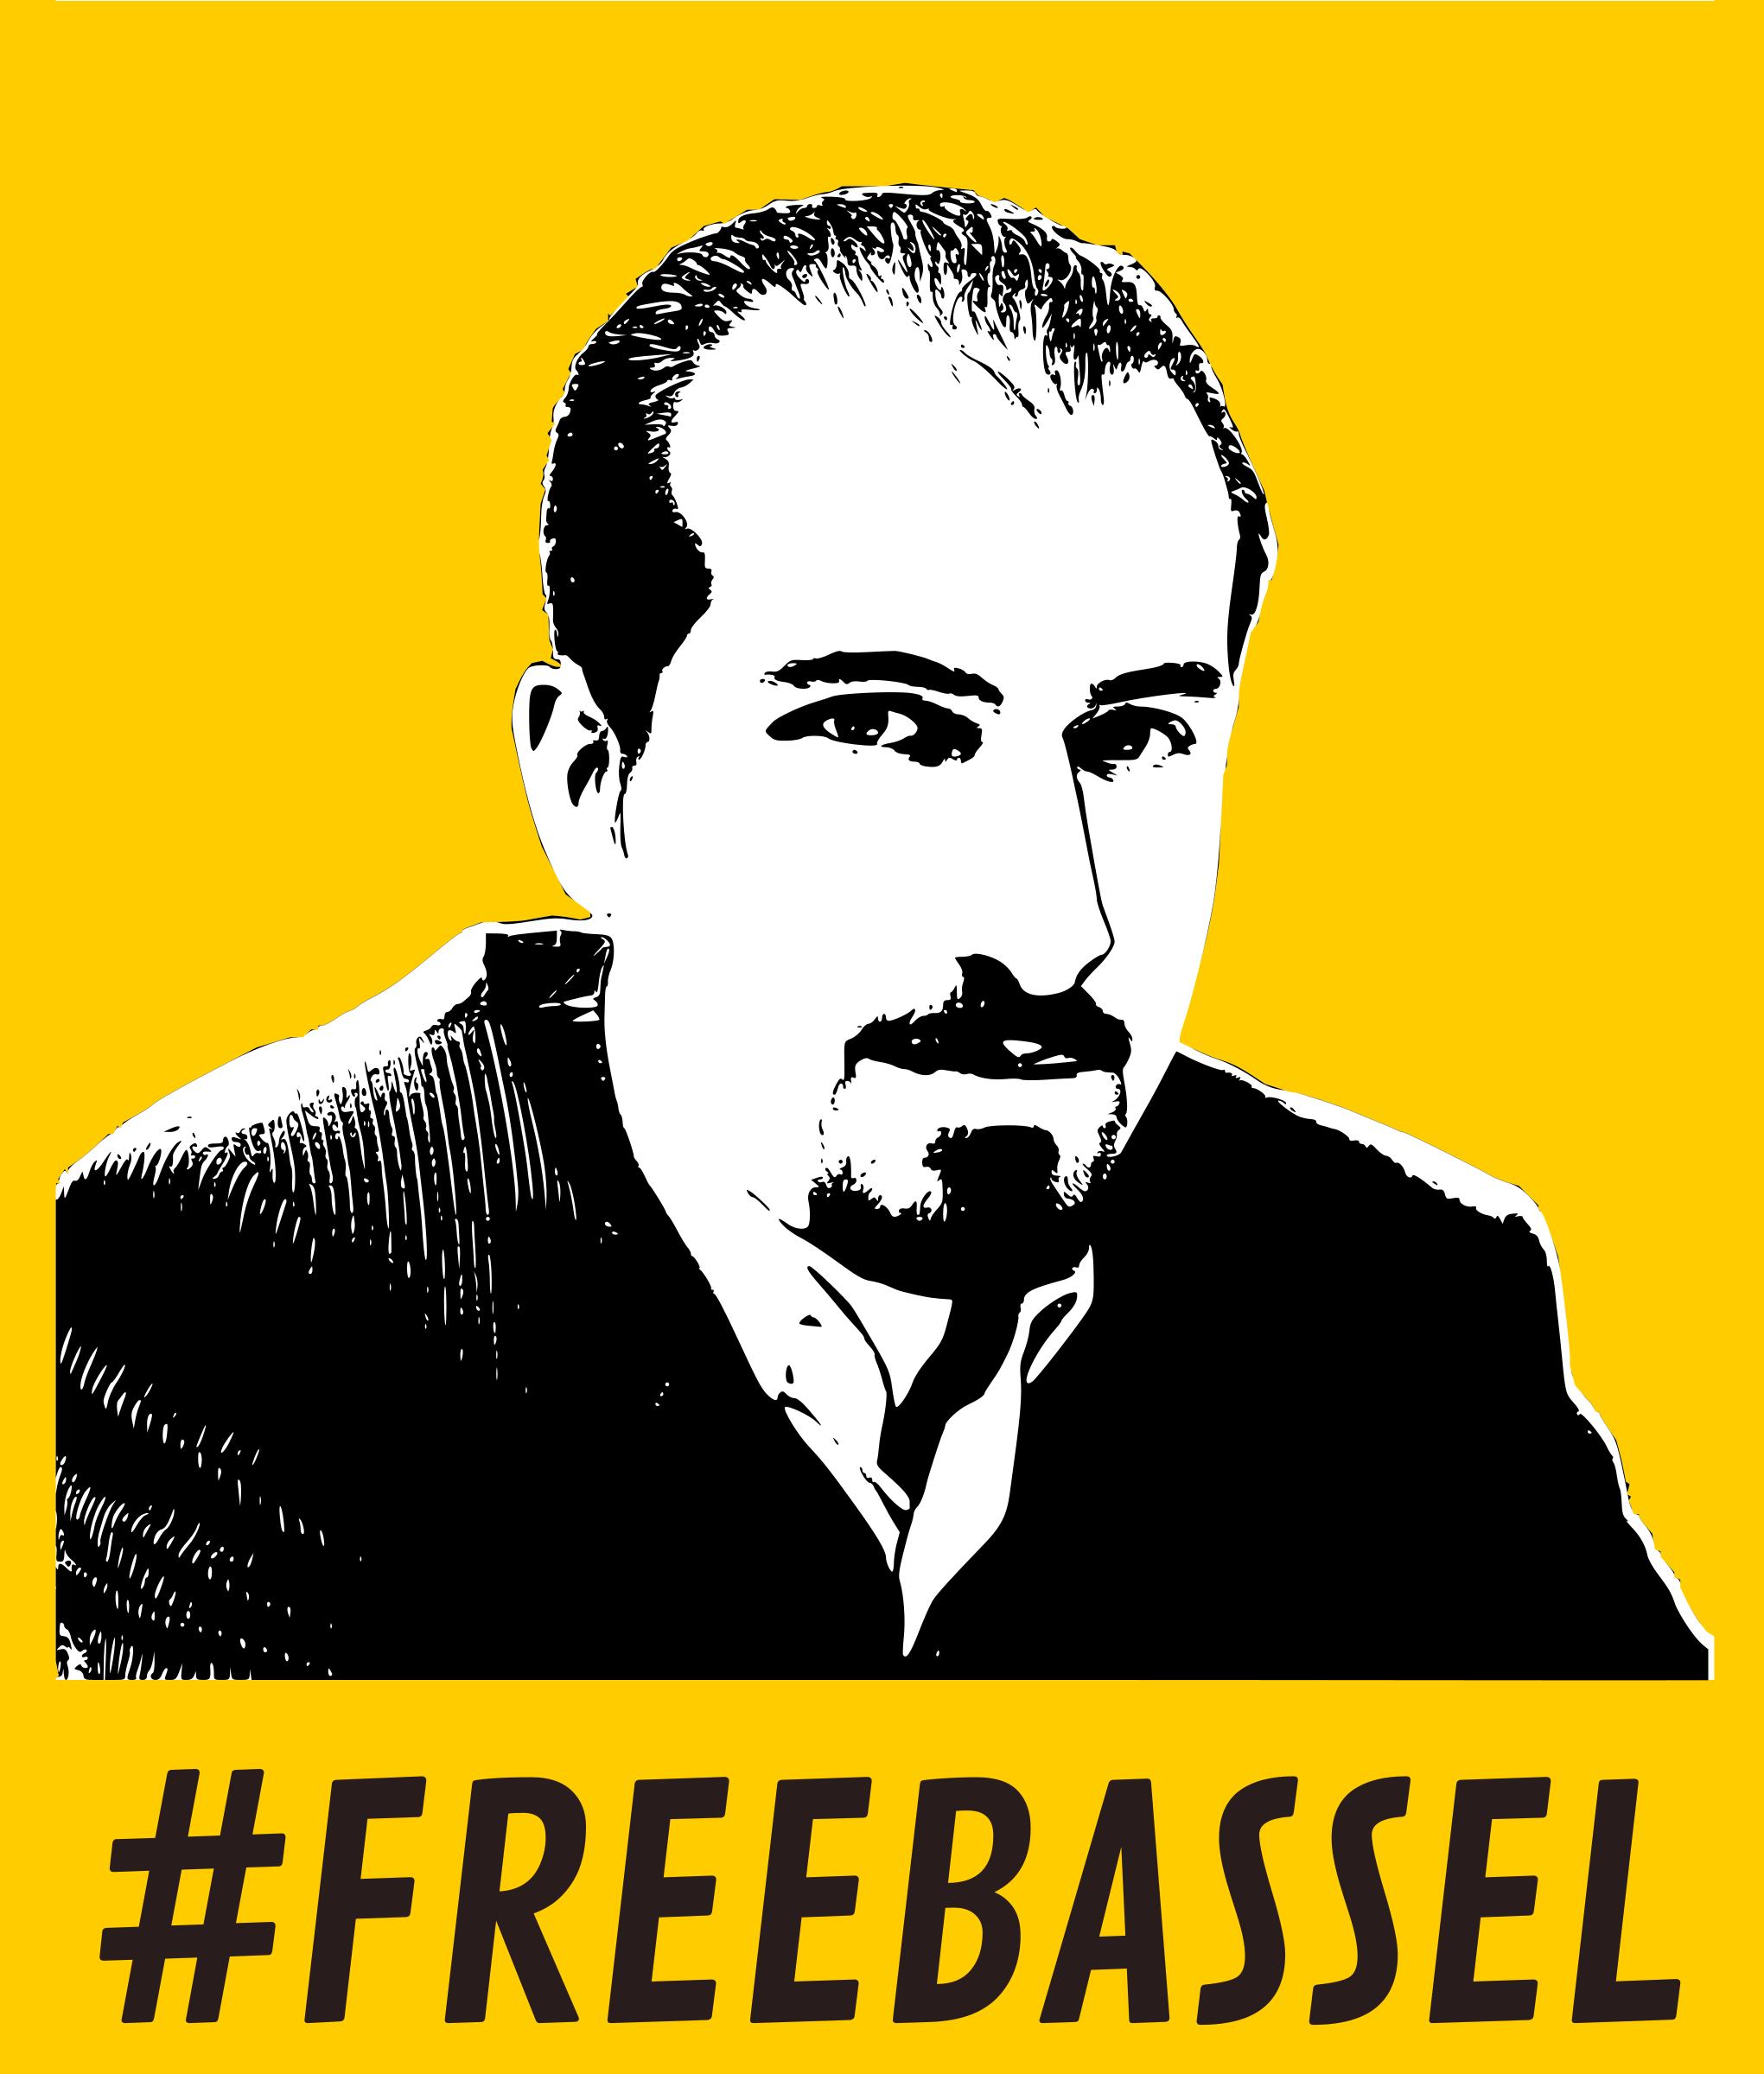 Freebassel yellow poster png